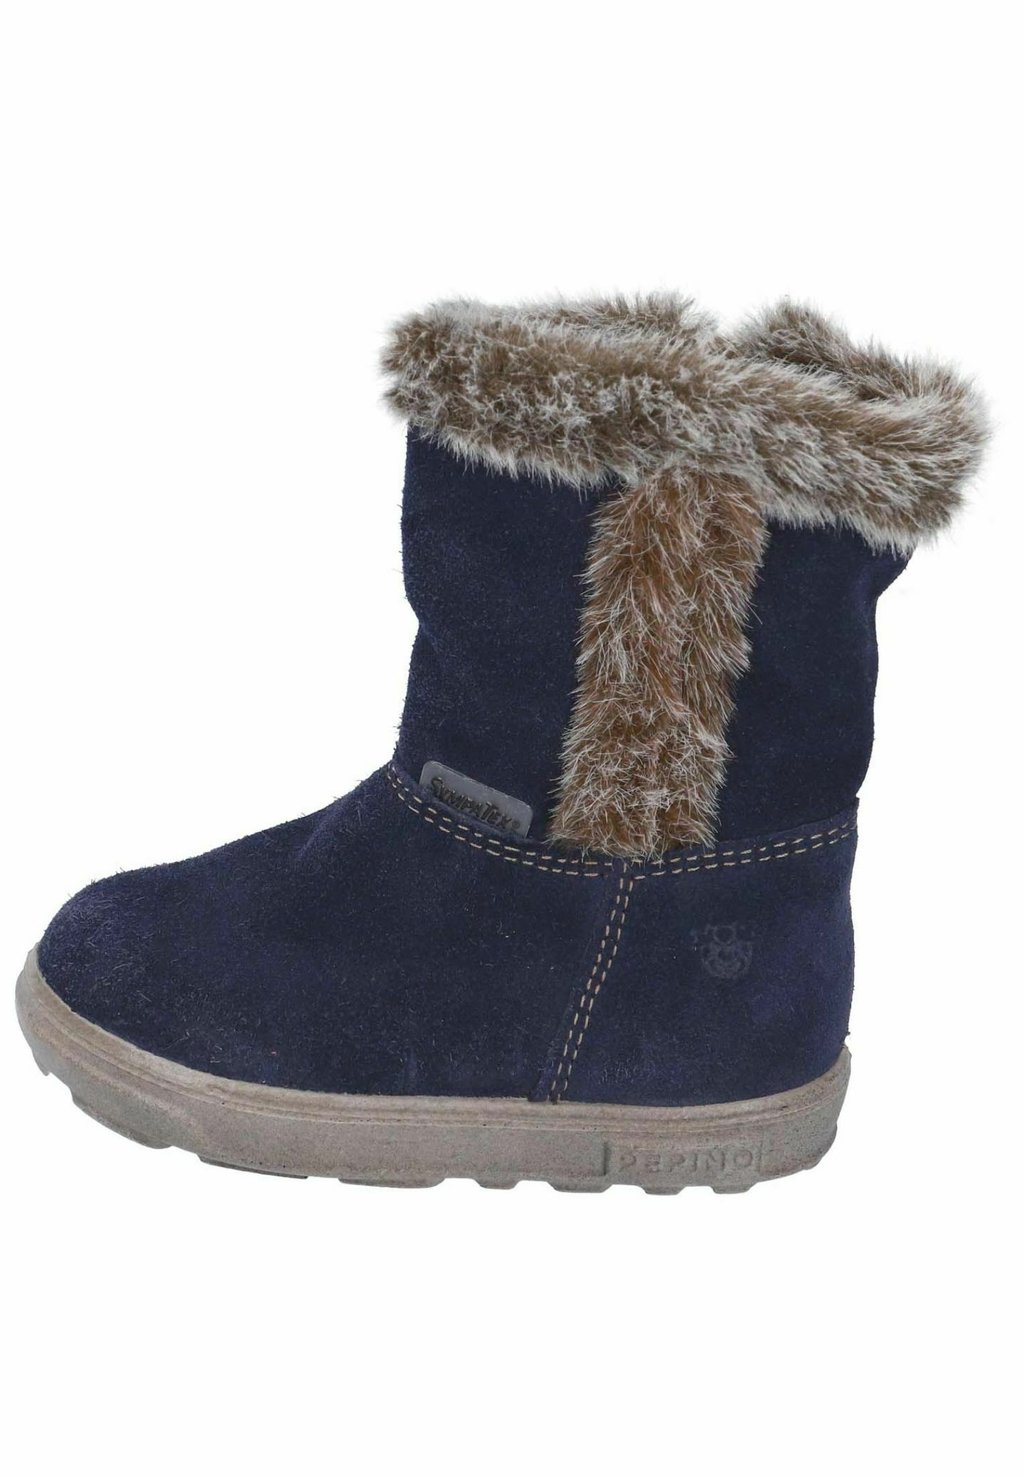 Снегоступы/зимние ботинки Pepino, цвет nautic